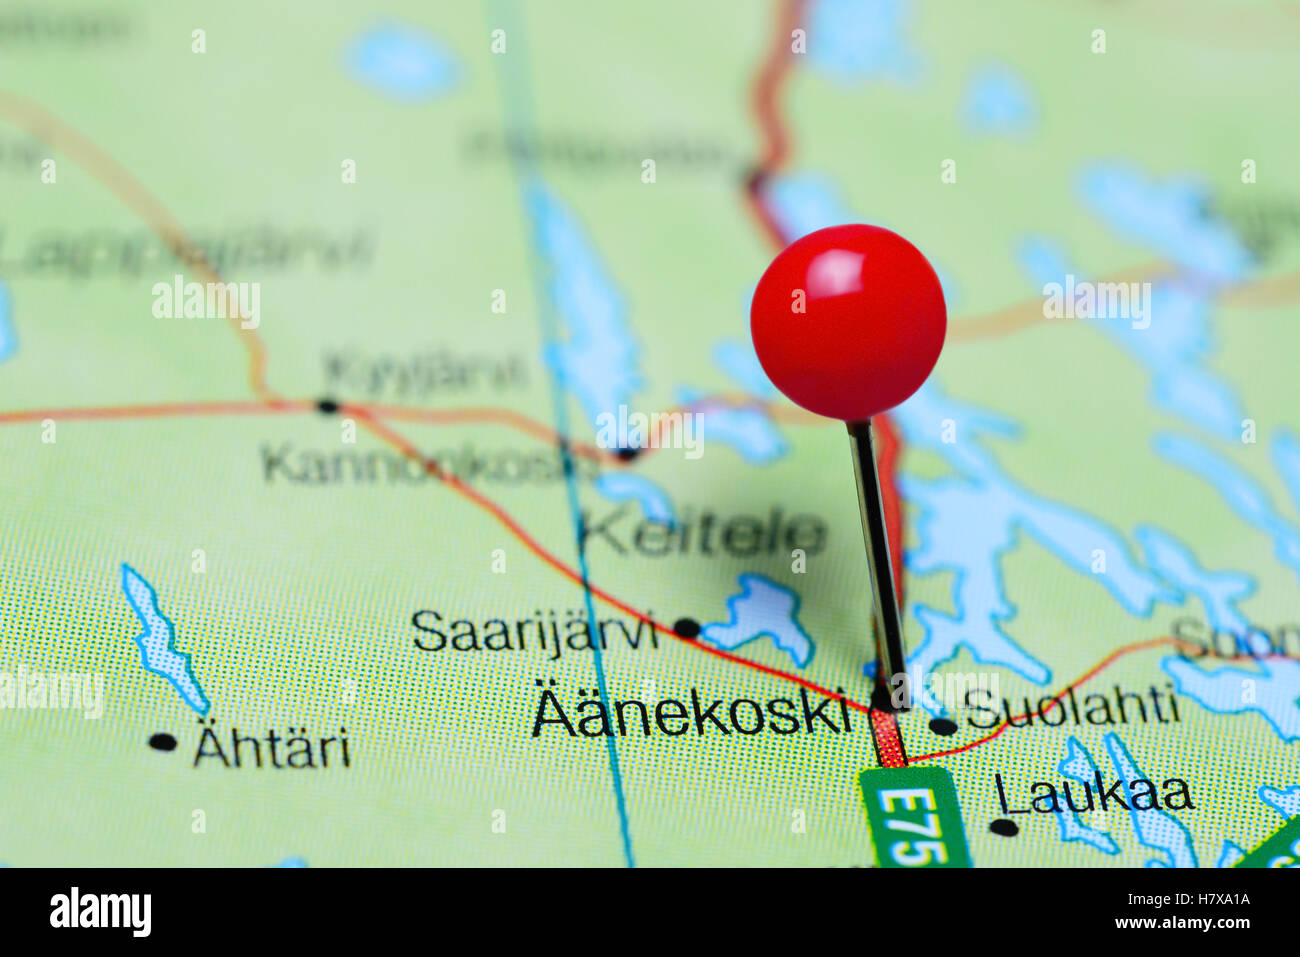 Aanekoski pinned on a map of Finland Stock Photo